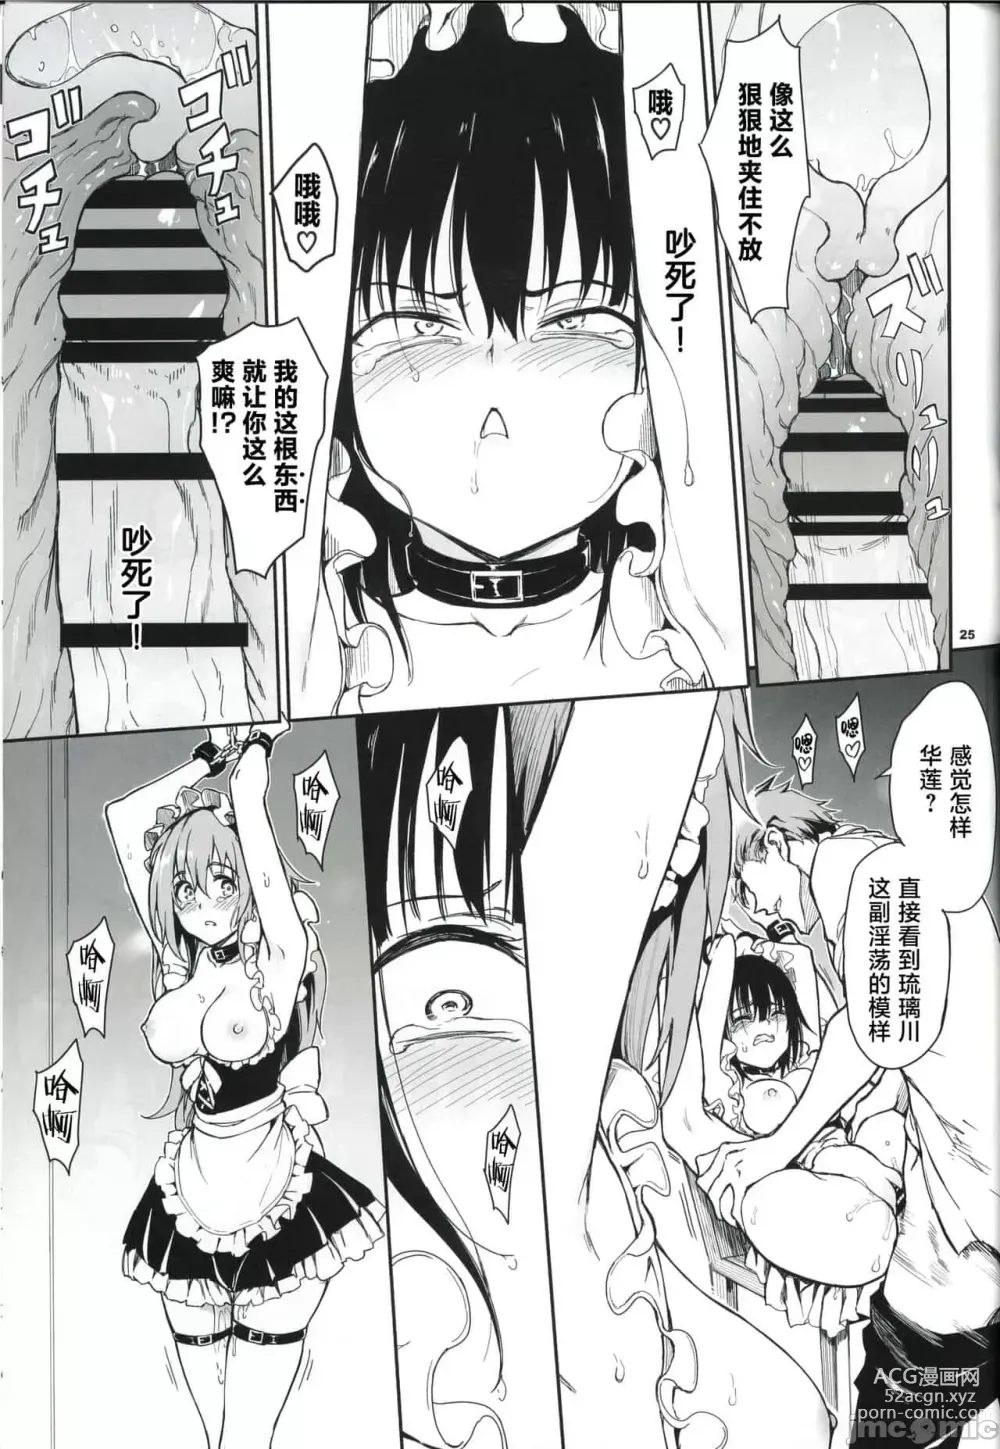 Page 150 of manga メイド教育 1-6